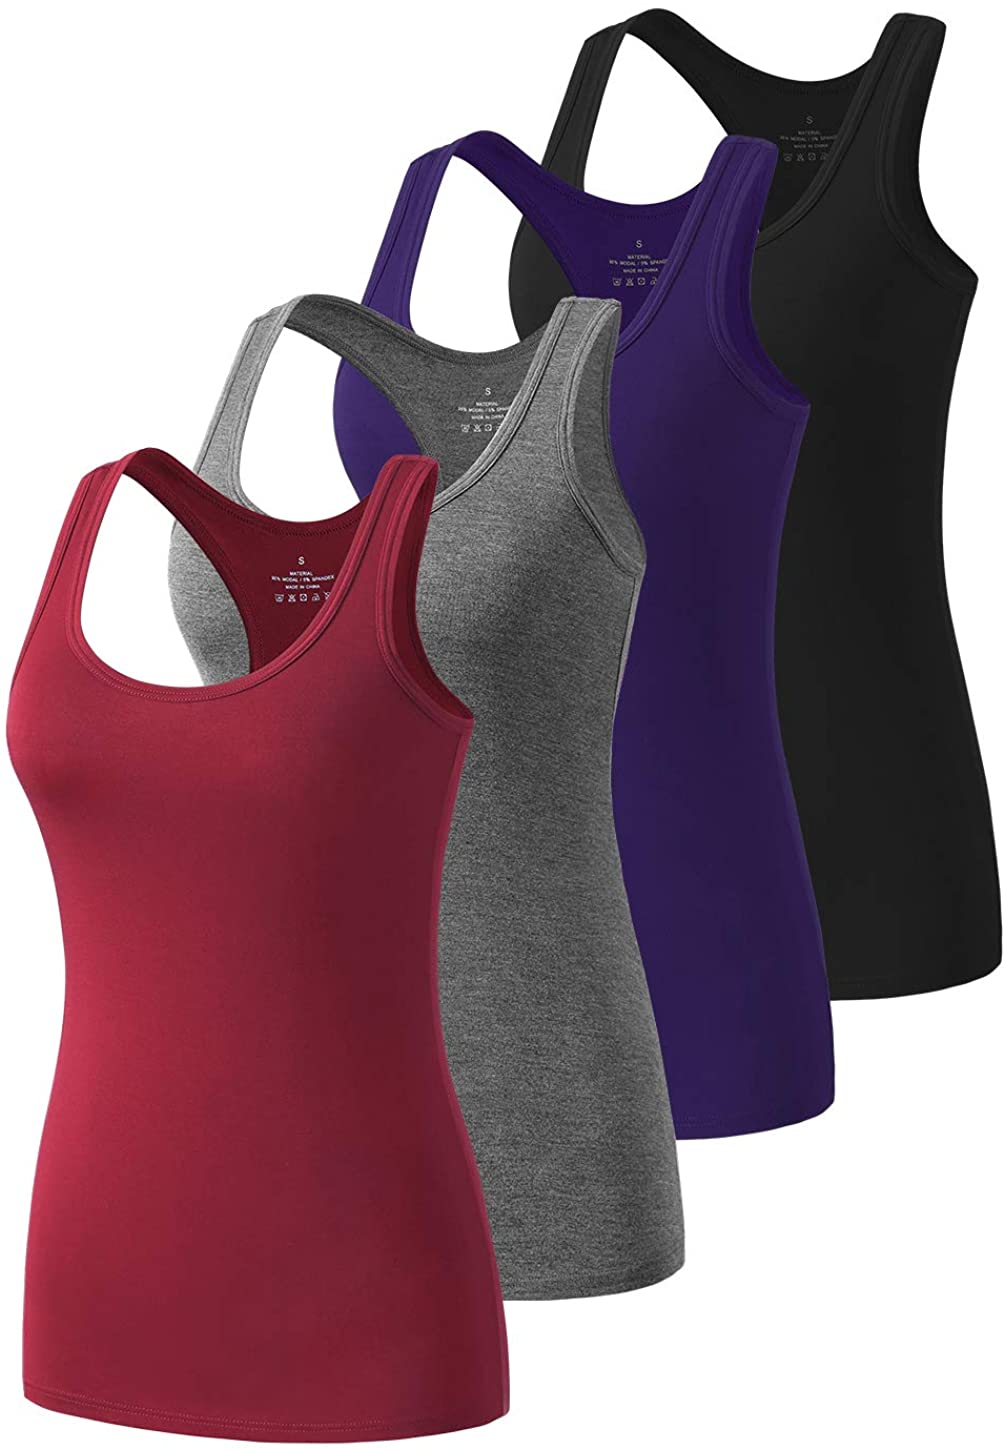 Star Vibe Racerback Workout Tank Tops for Women Basic Athletic Tanks Yoga Undershirt Sleeveless Exercise Tops 4 Pack